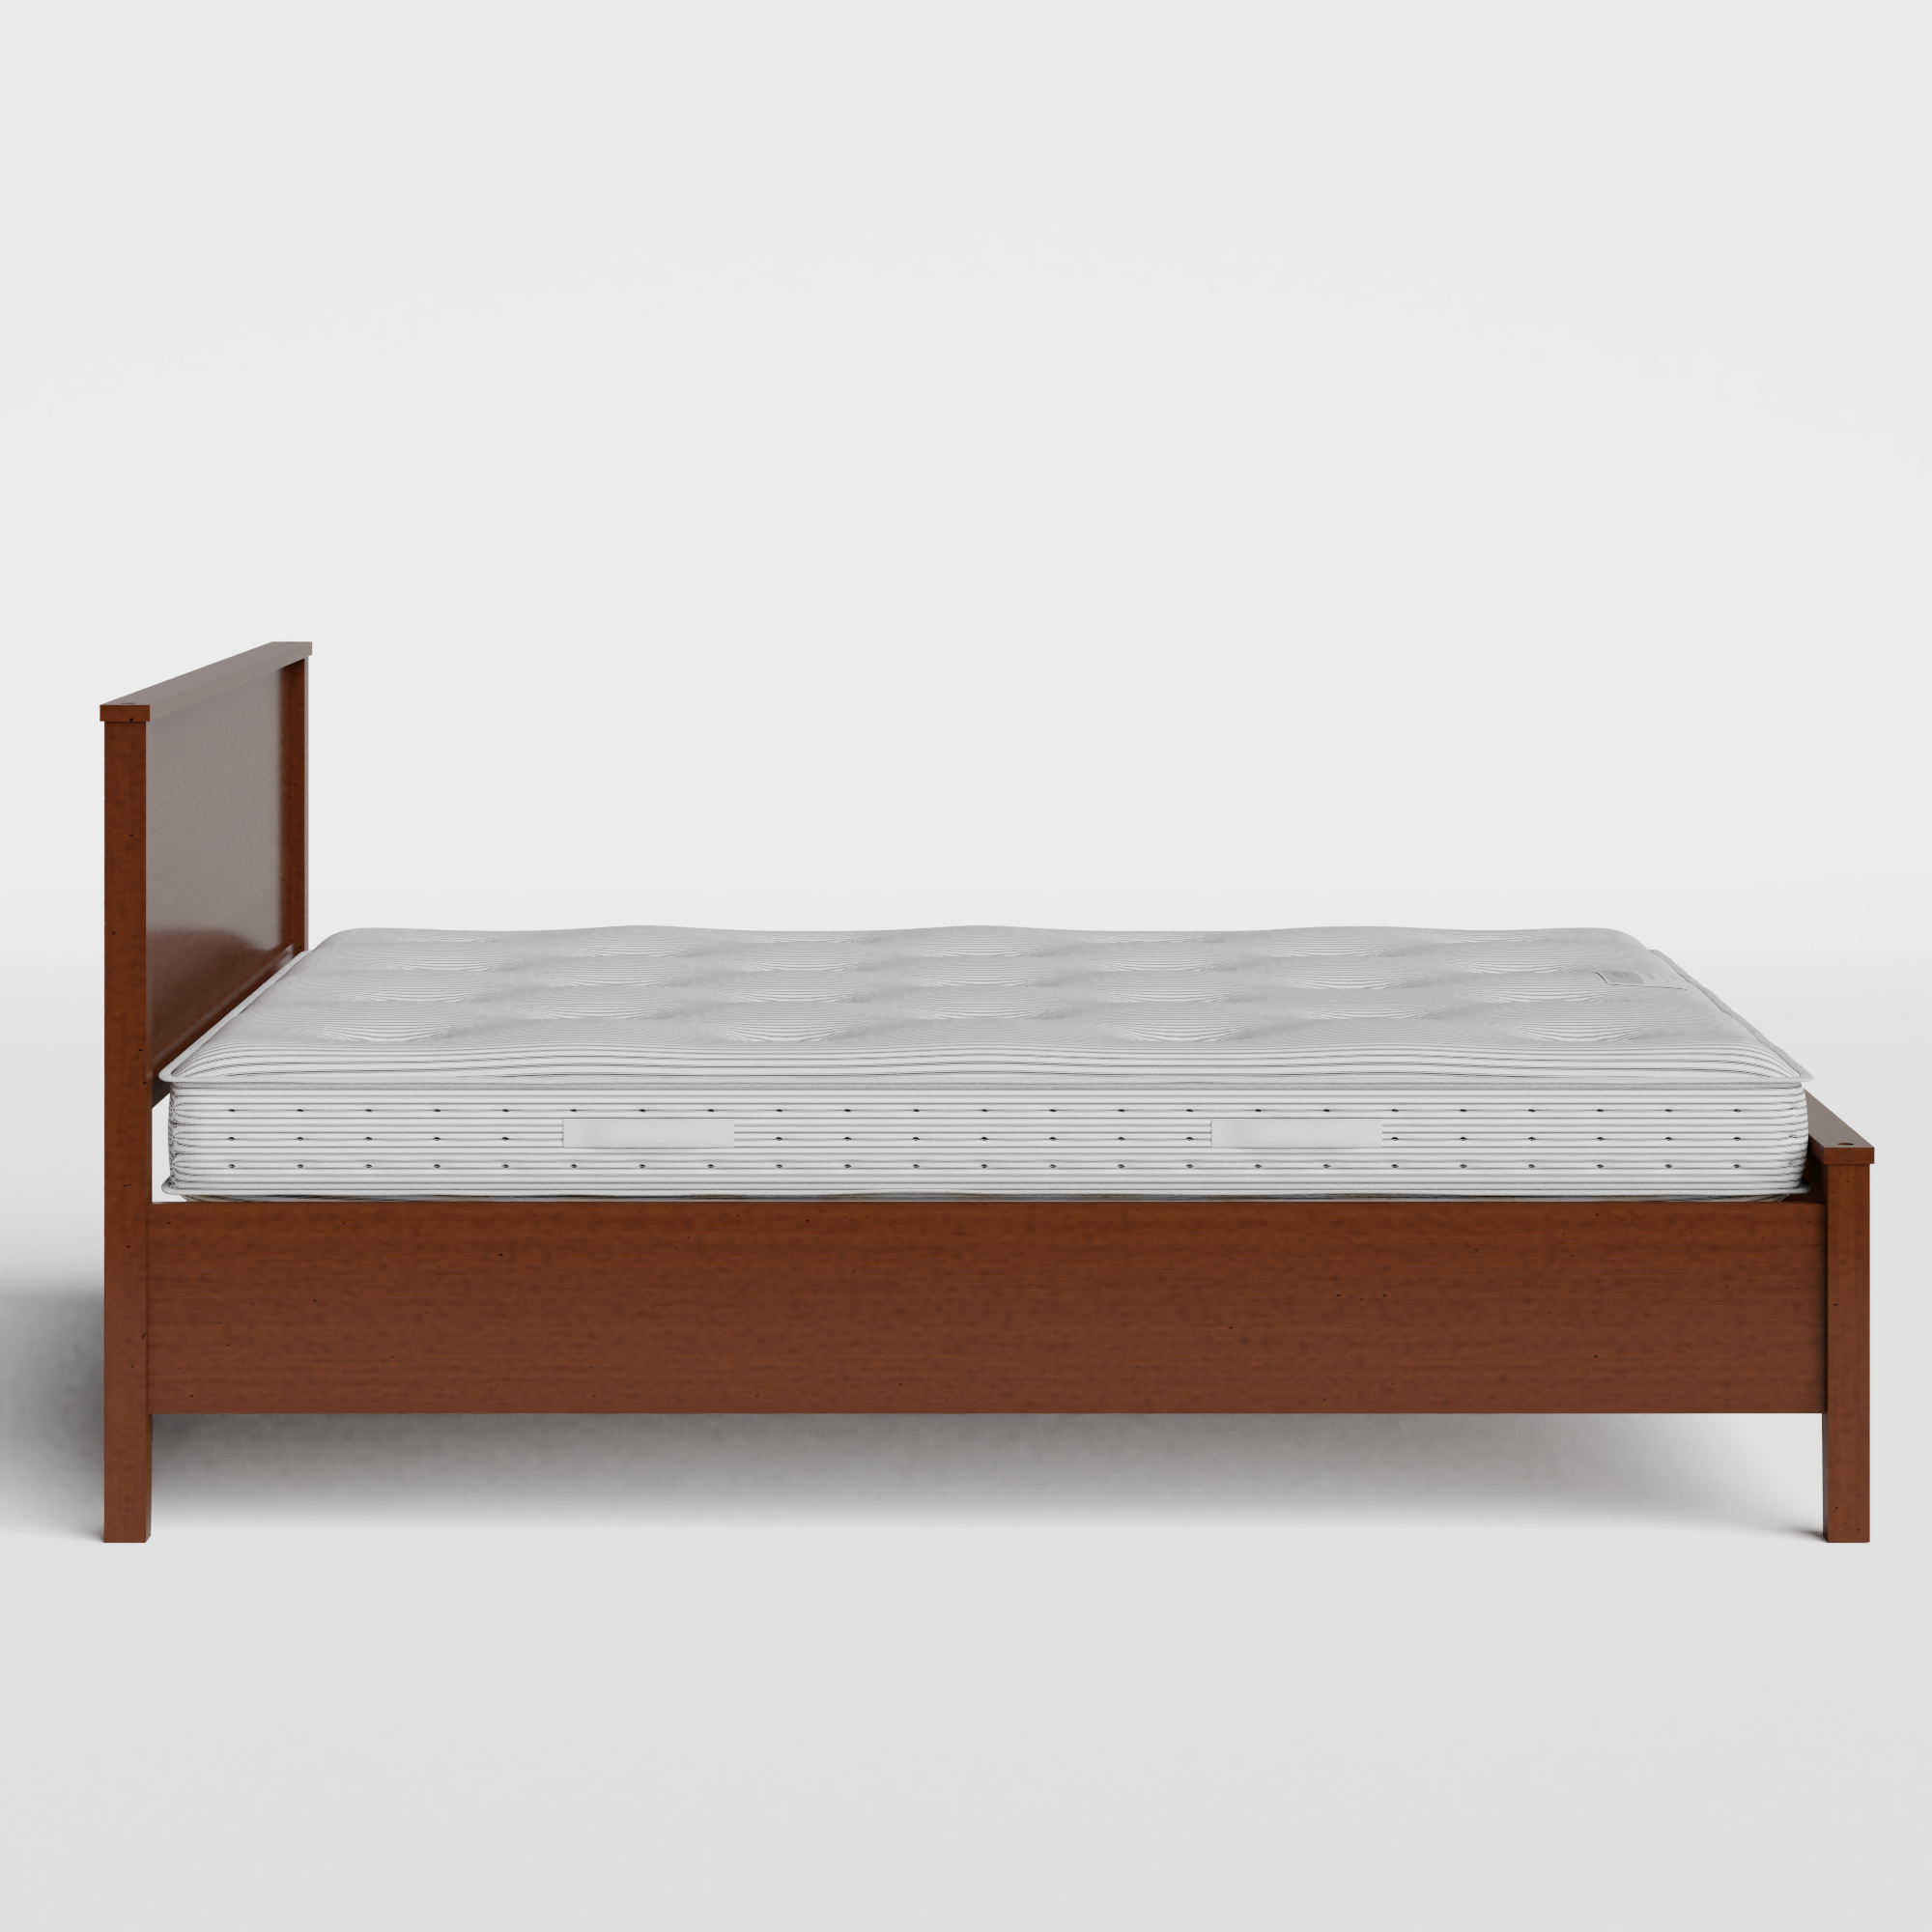 Ramsay wood bed in dark cherry with Juno mattress